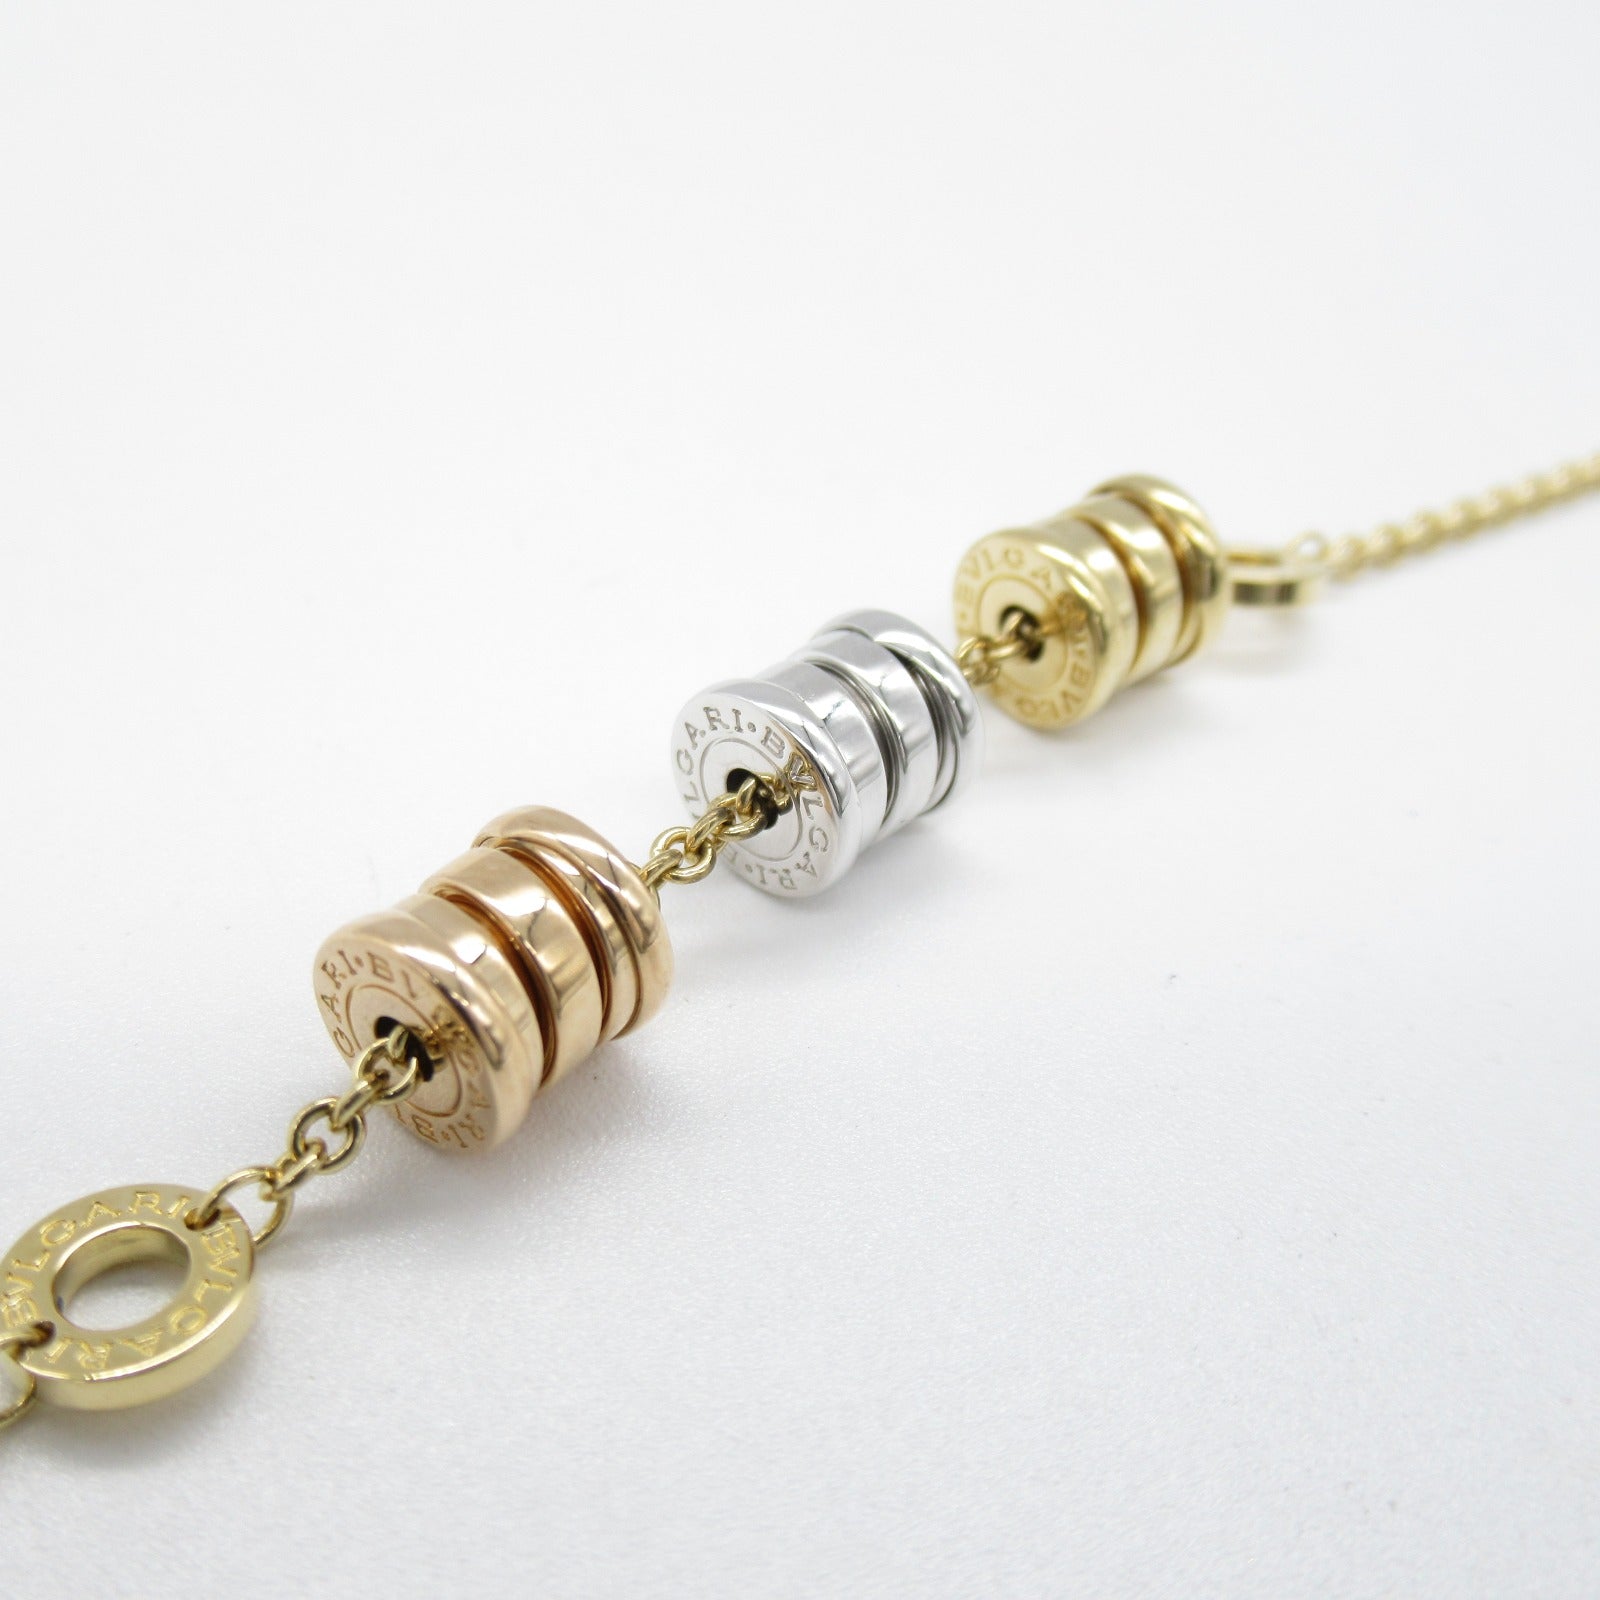 Bulgari BVLGARI B-zero1 Beezero One Element Bracelet Bracelet Accessories K18 (yellow g) K18WG (white gold) K18PG (pink gold ladies gold)